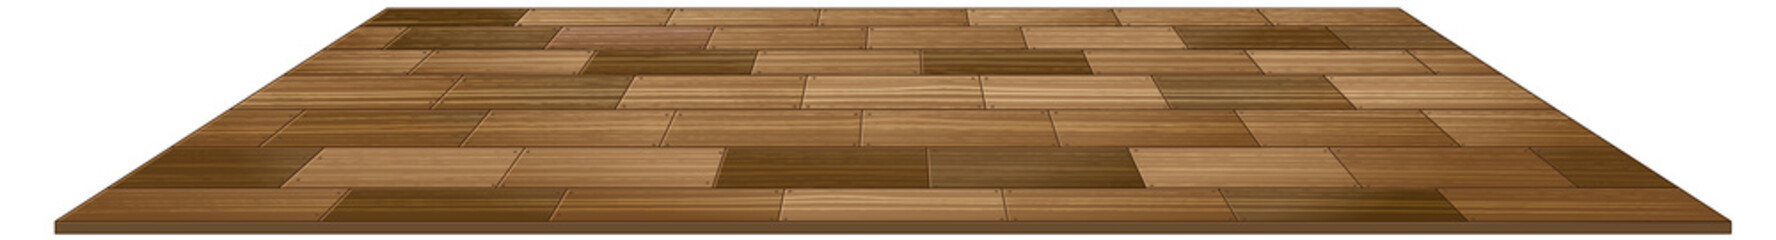 Wooden floor tiles isolated on white background